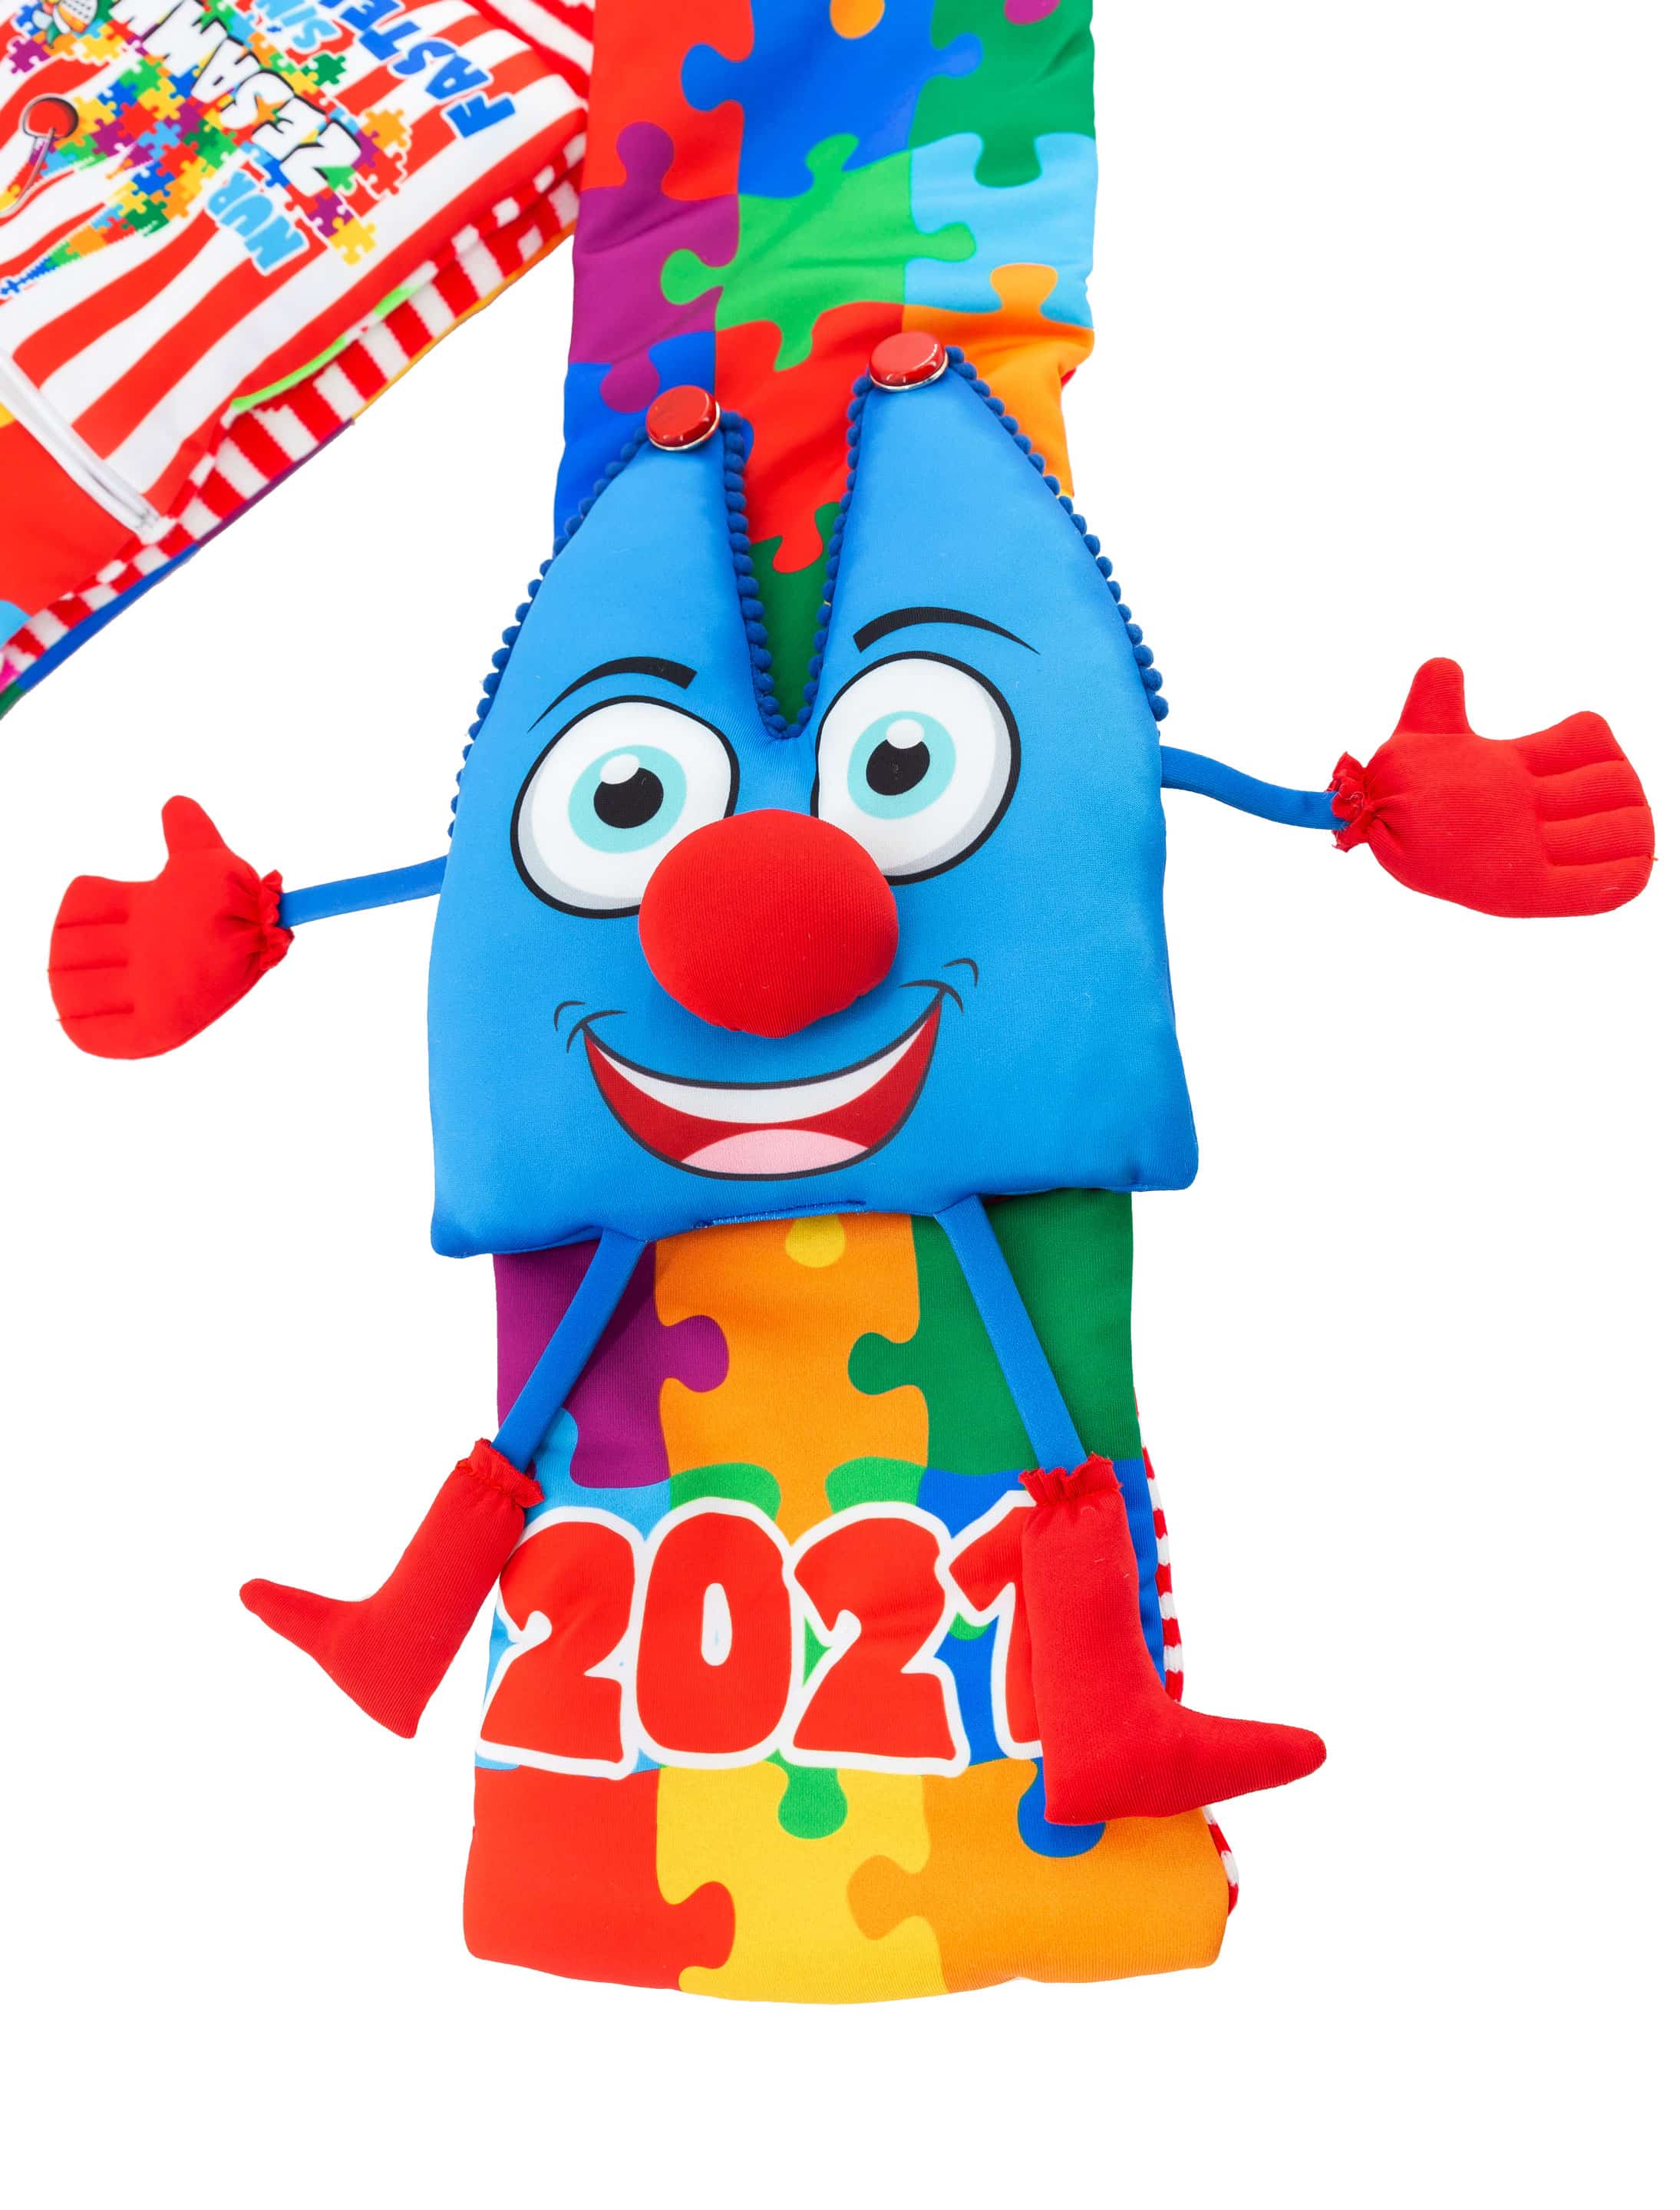 Mottoschal Kinder 2020/2021